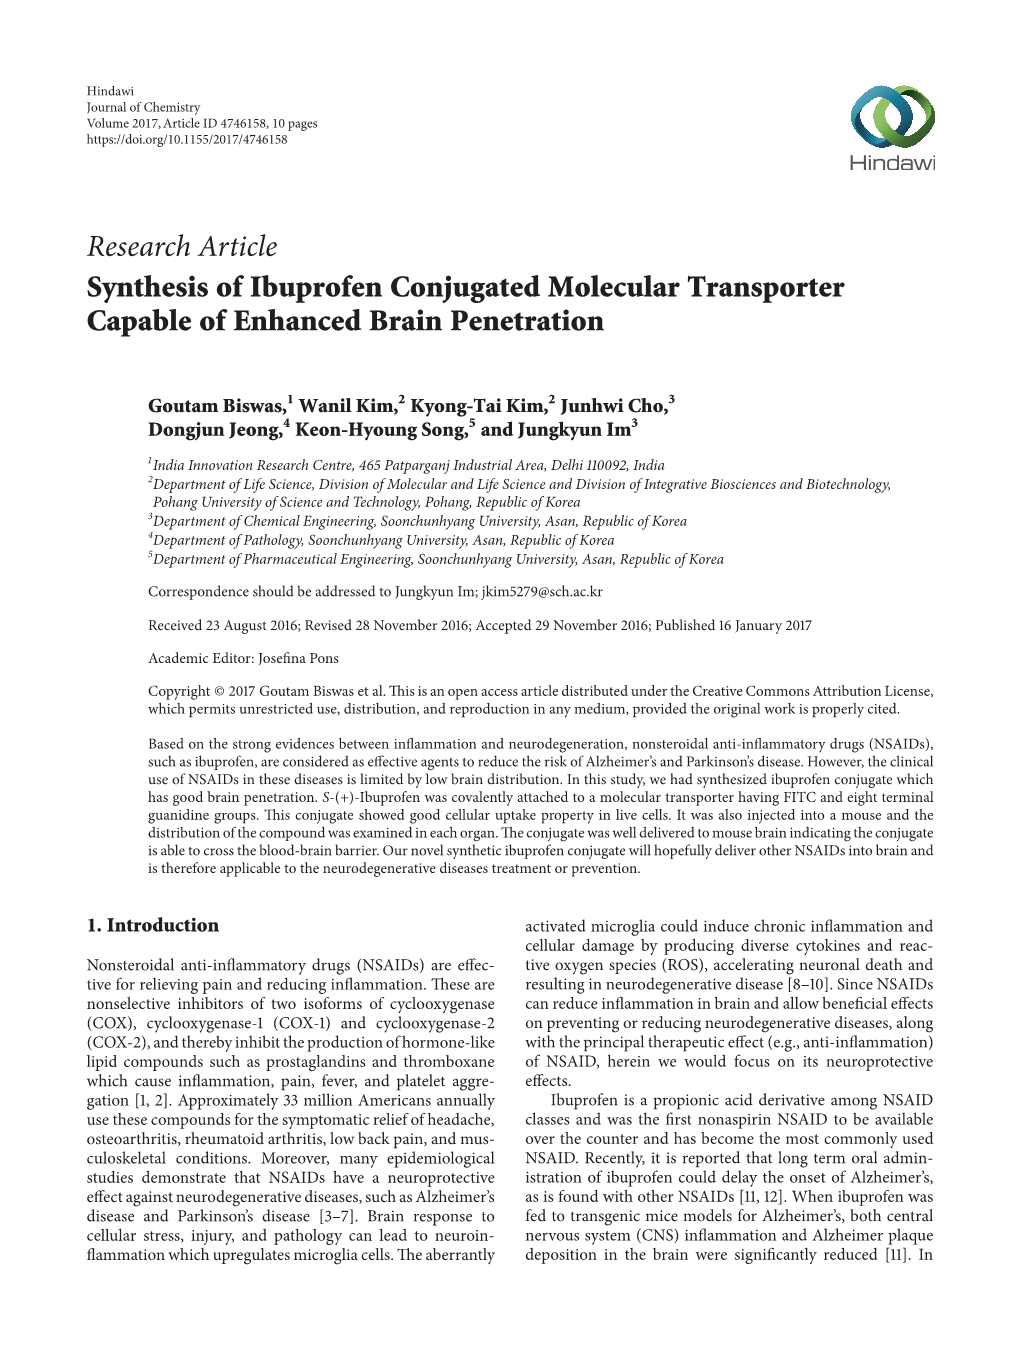 Synthesis of Ibuprofen Conjugated Molecular Transporter Capable of Enhanced Brain Penetration